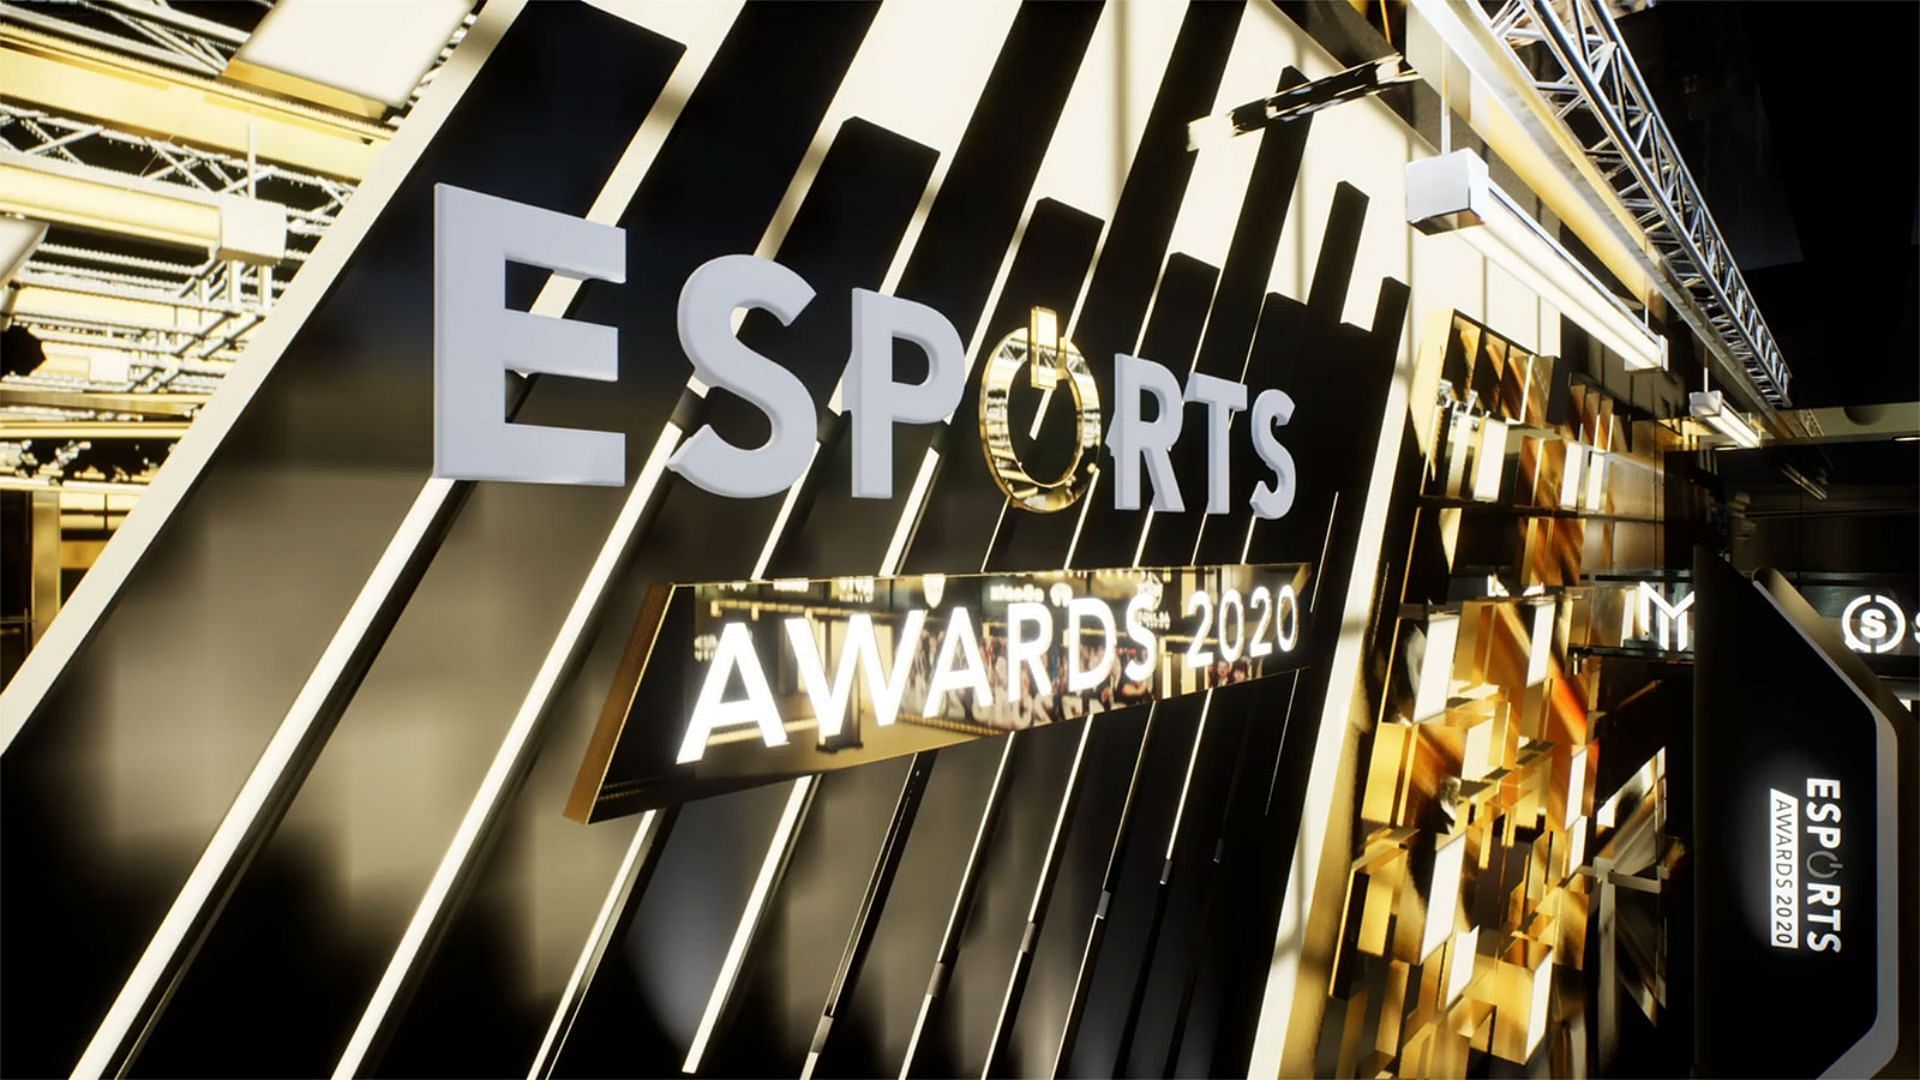 Esports awards 2022 details (Image via Sportskeeda)